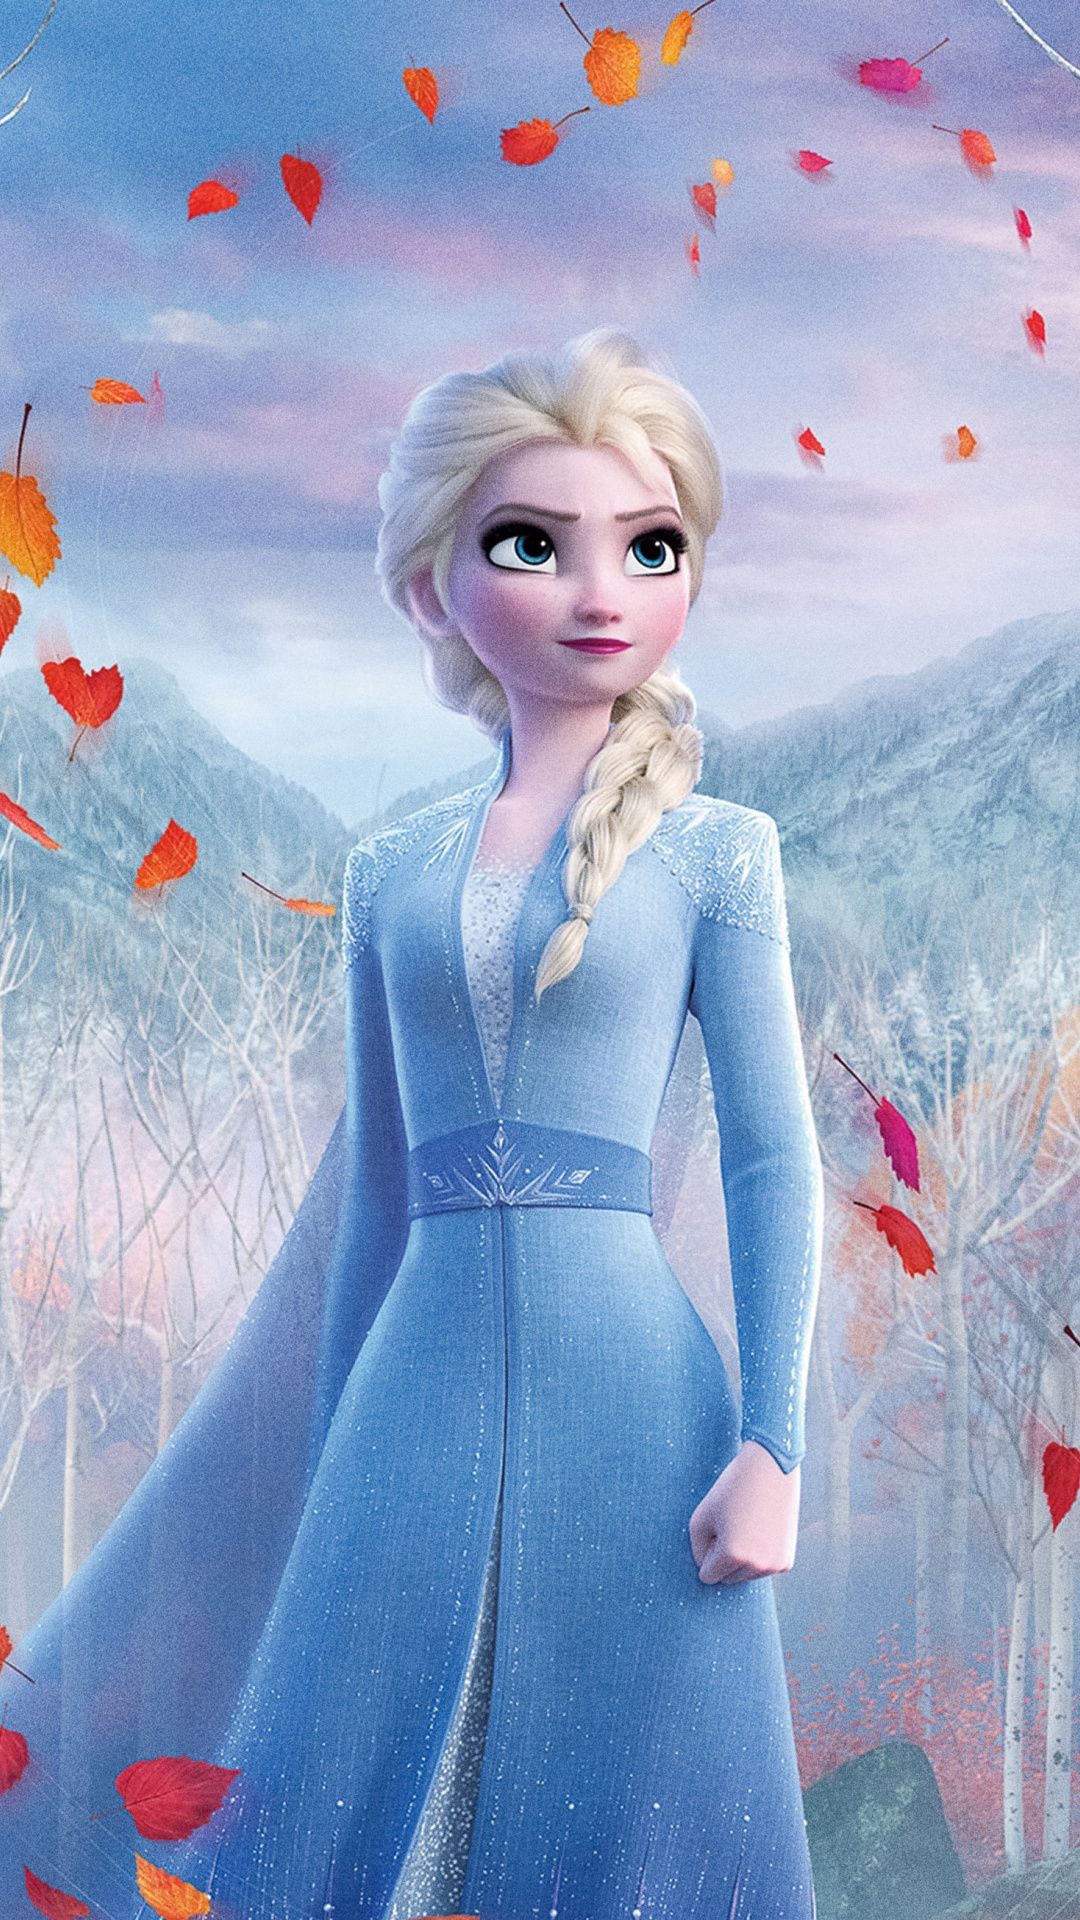 Frozen 2 ElsaK wallpaper, free and easy to download